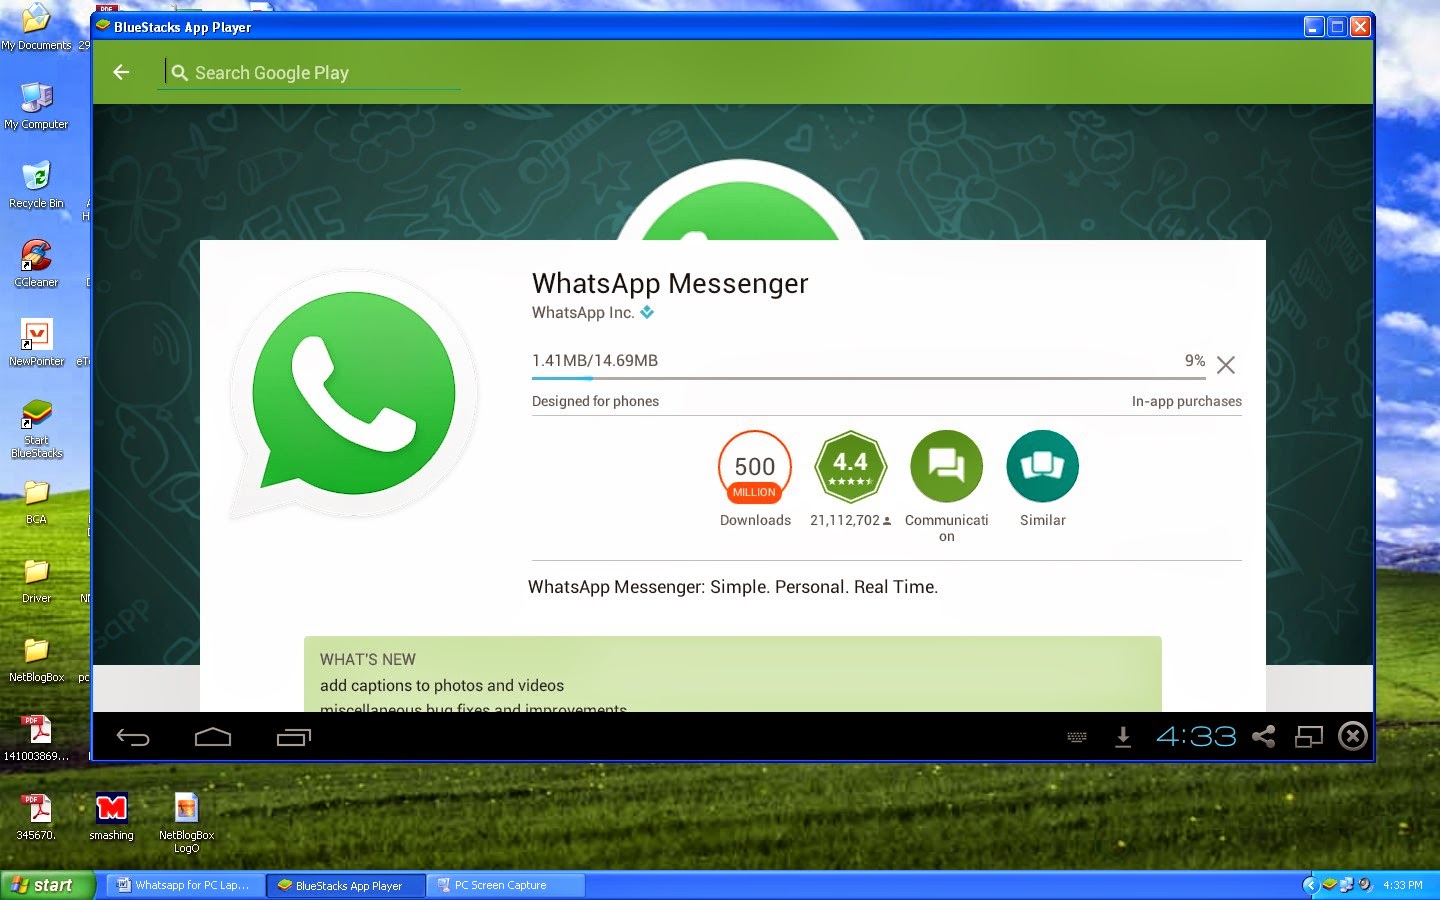 whatsapp app for pc windows 7 download